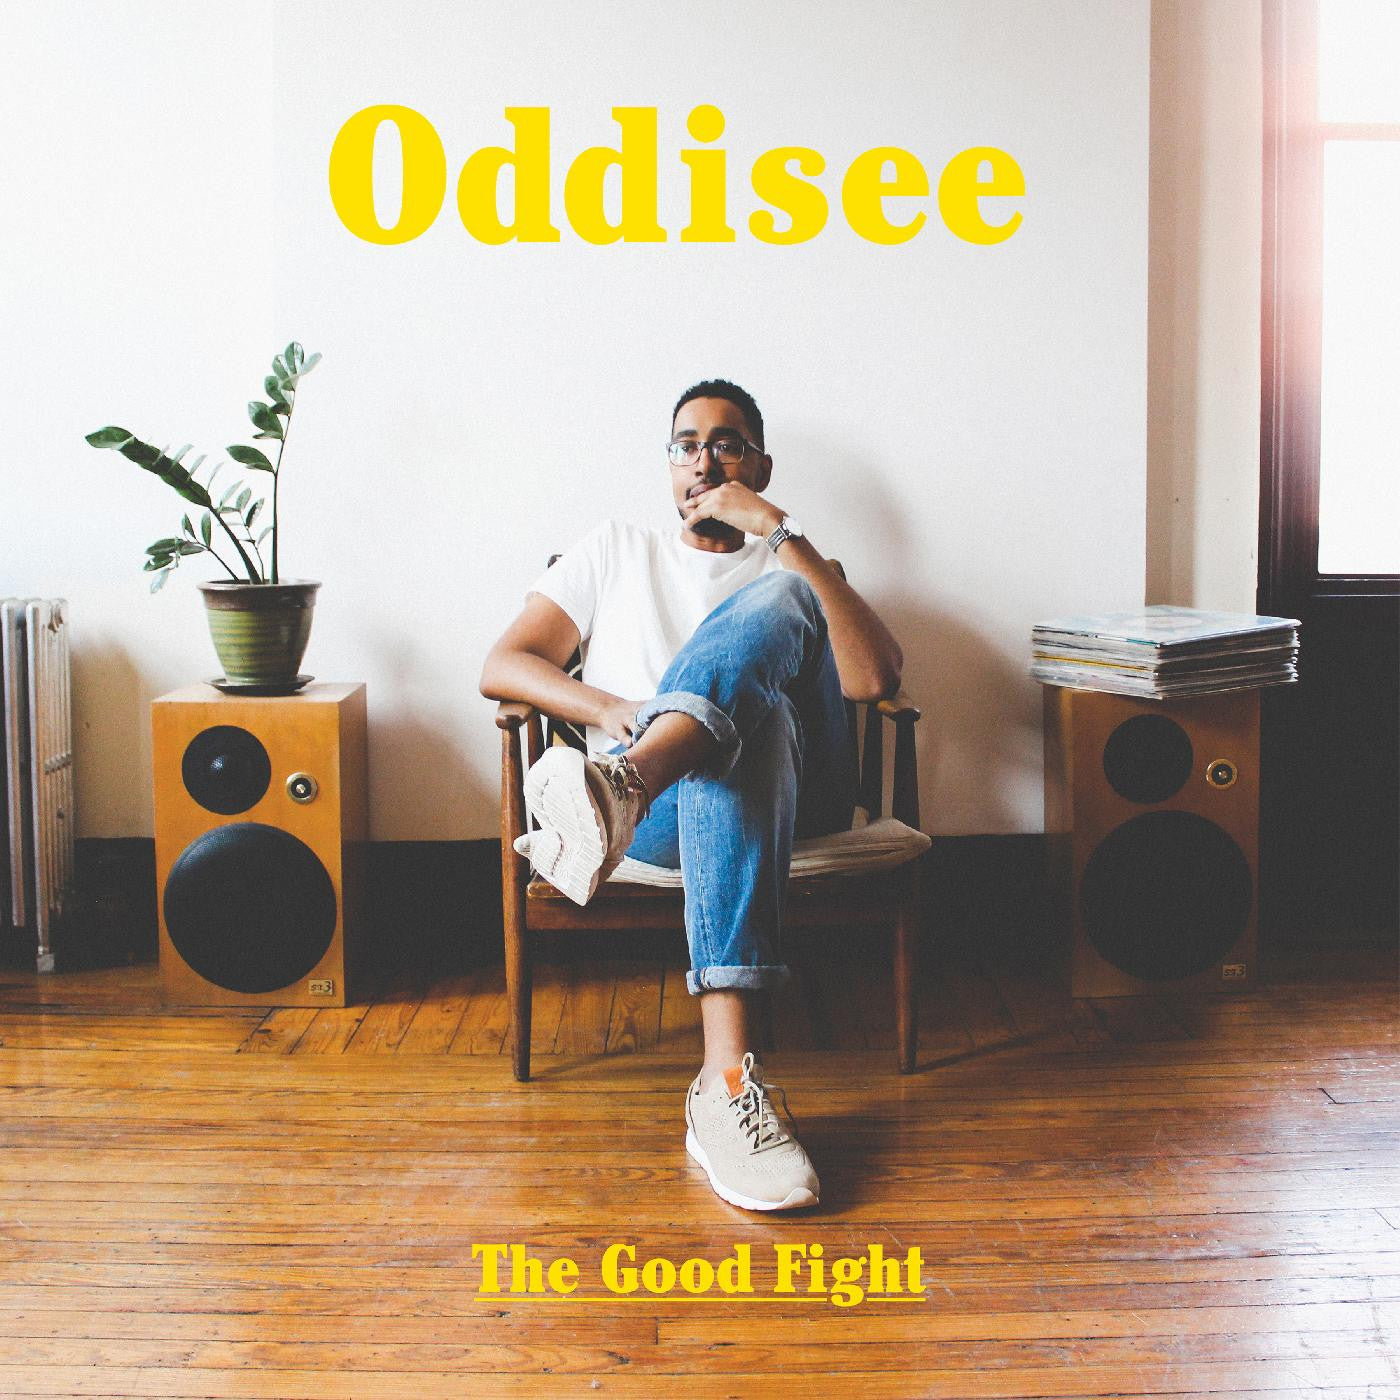 Oddisee - The Good Fight LP